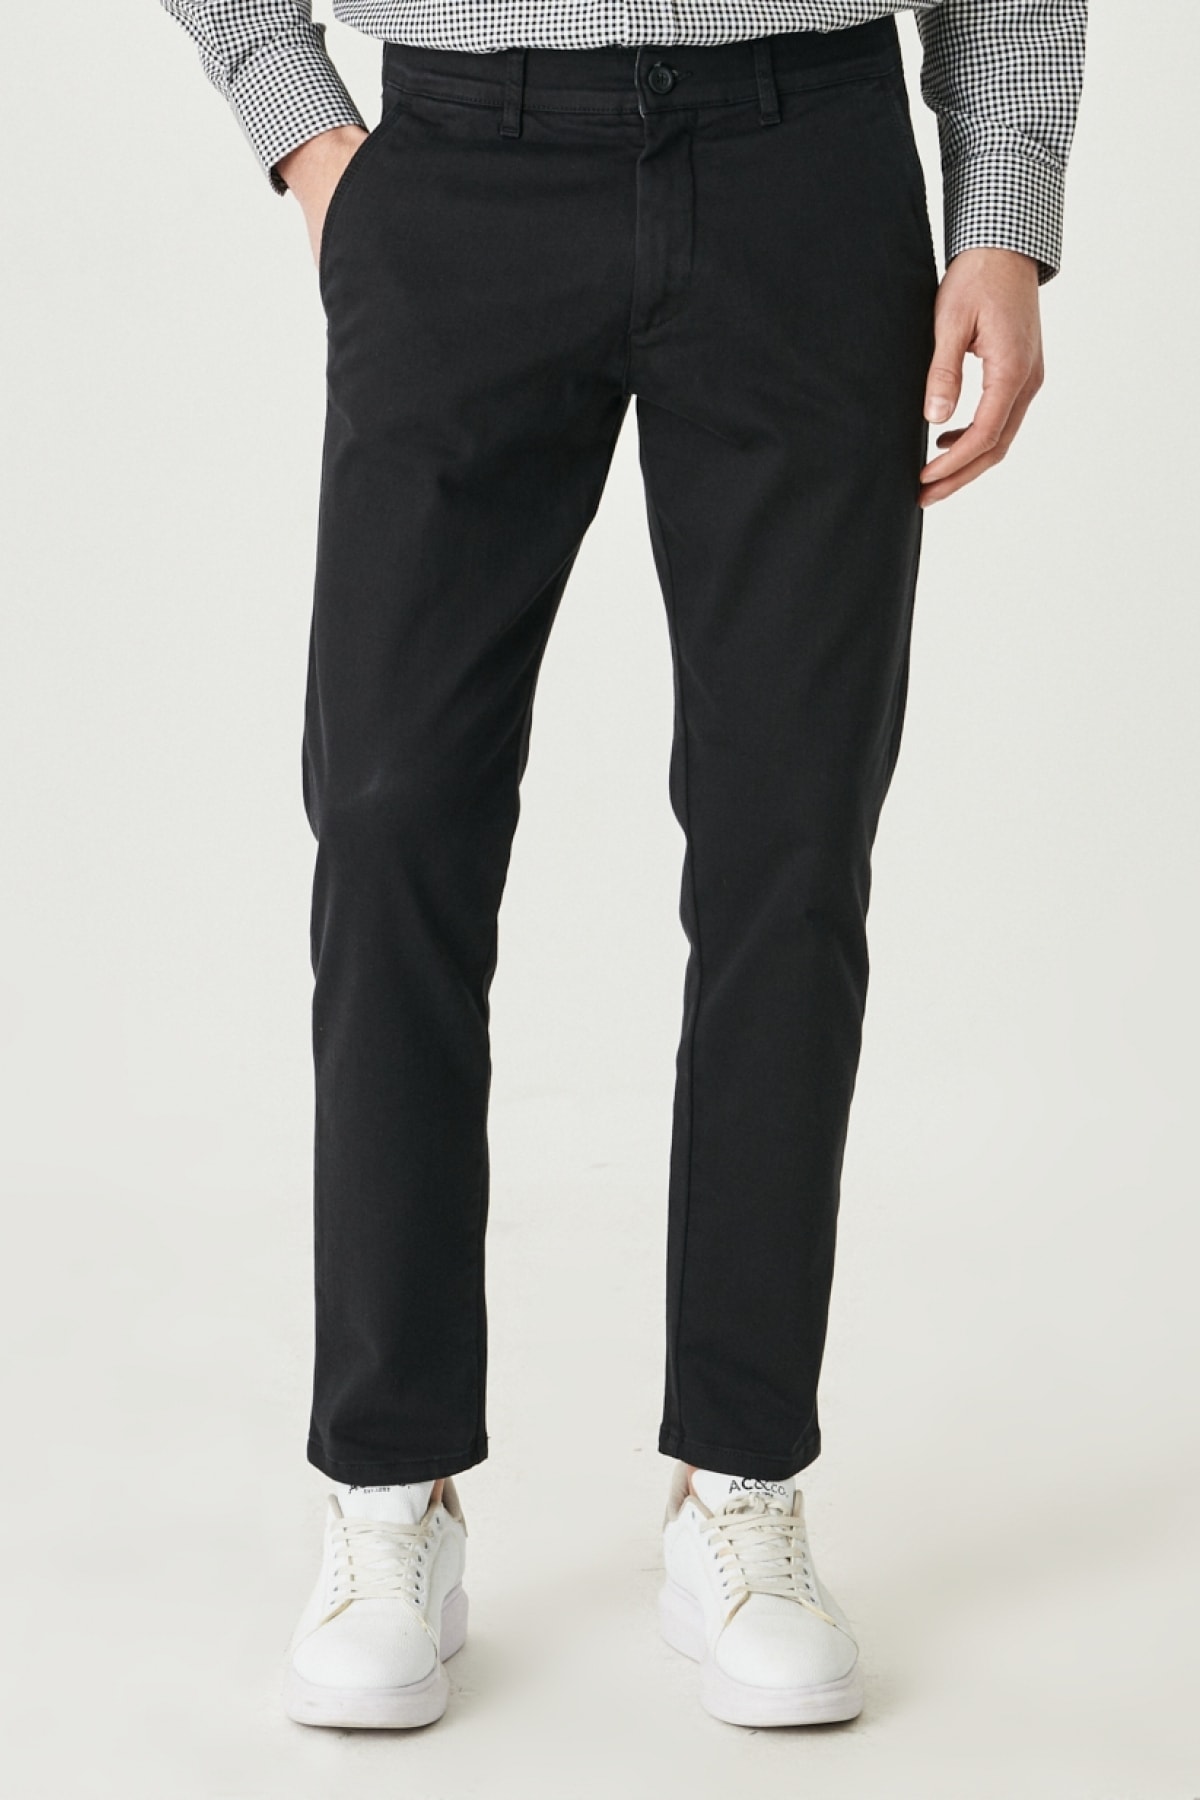 Levně ALTINYILDIZ CLASSICS Men's Black Comfort Fit 360 Degree All-Way Side Pocket Trousers